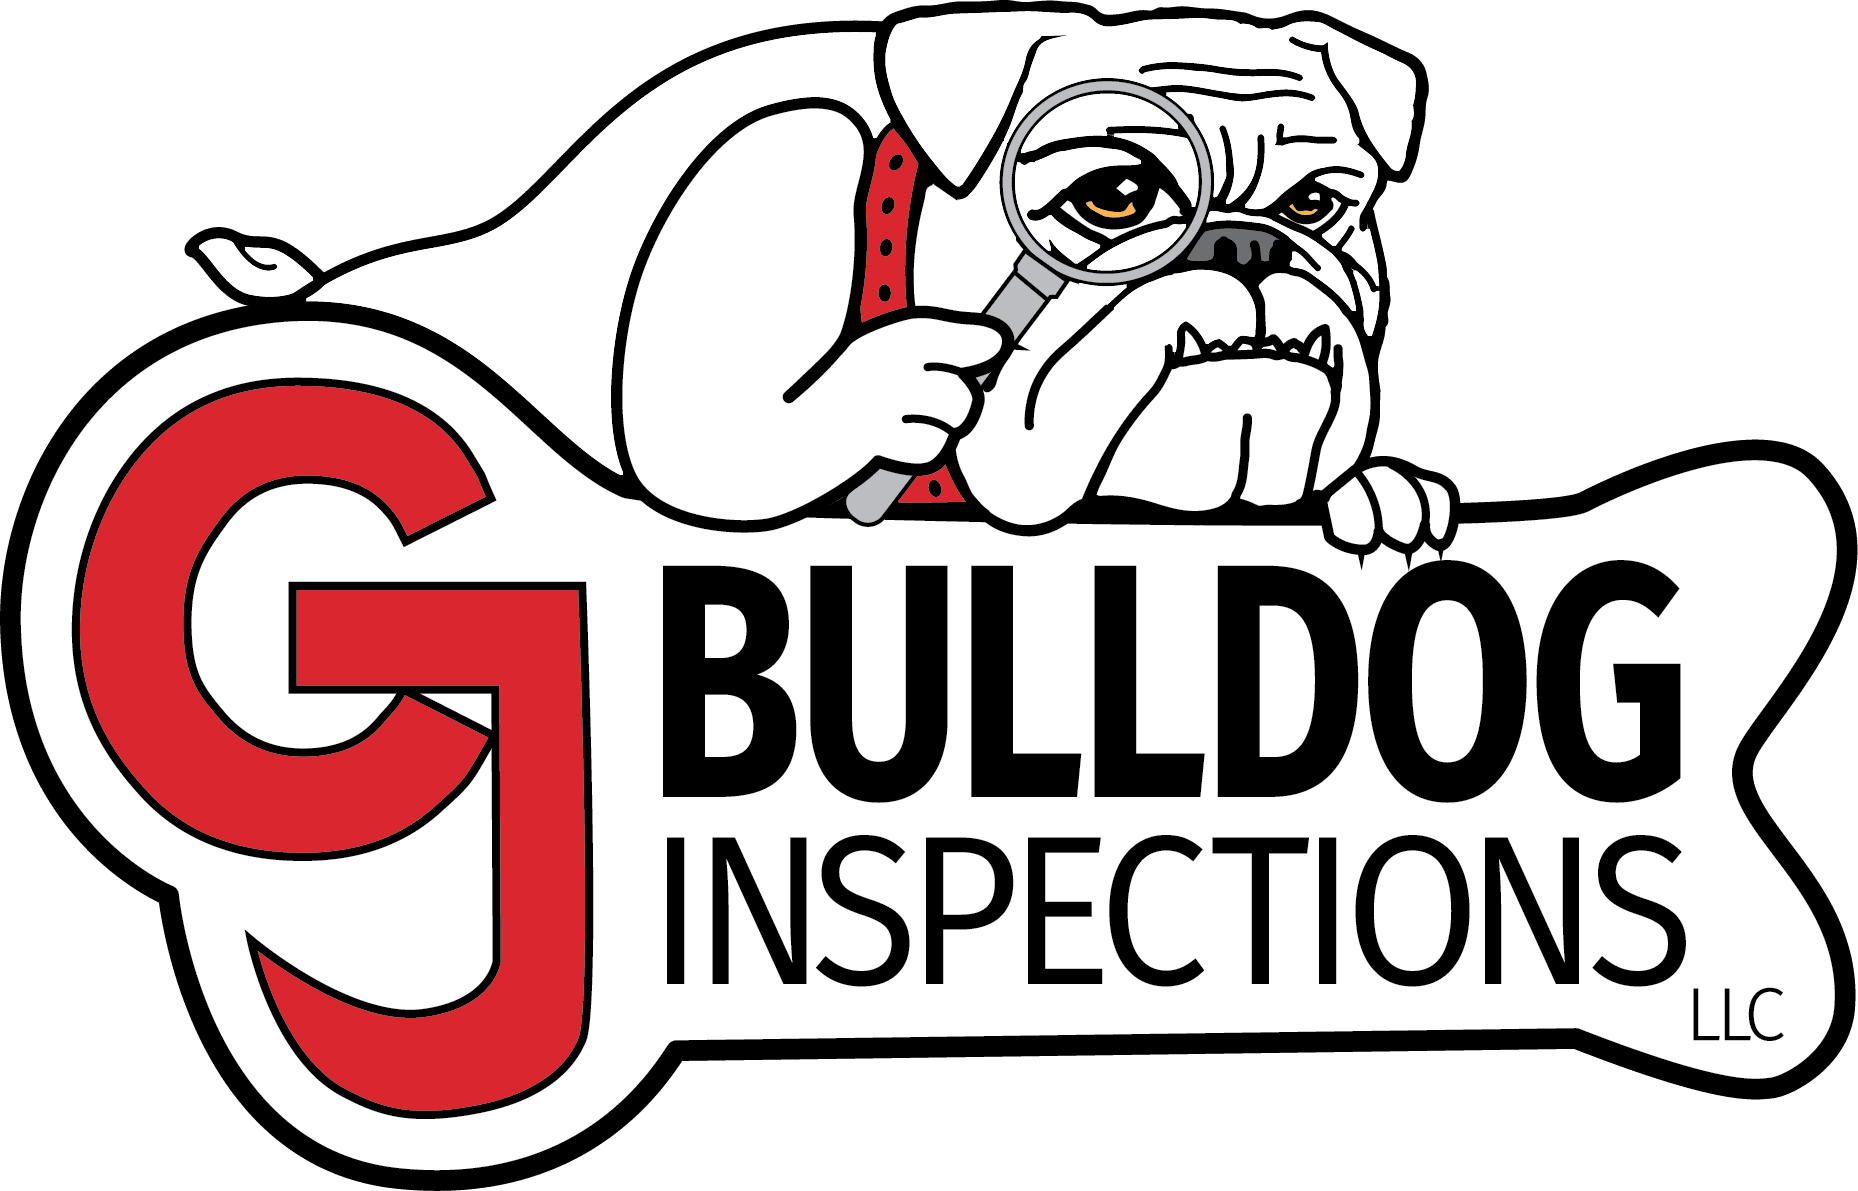 CJ Bulldog Inspections LLC Logo